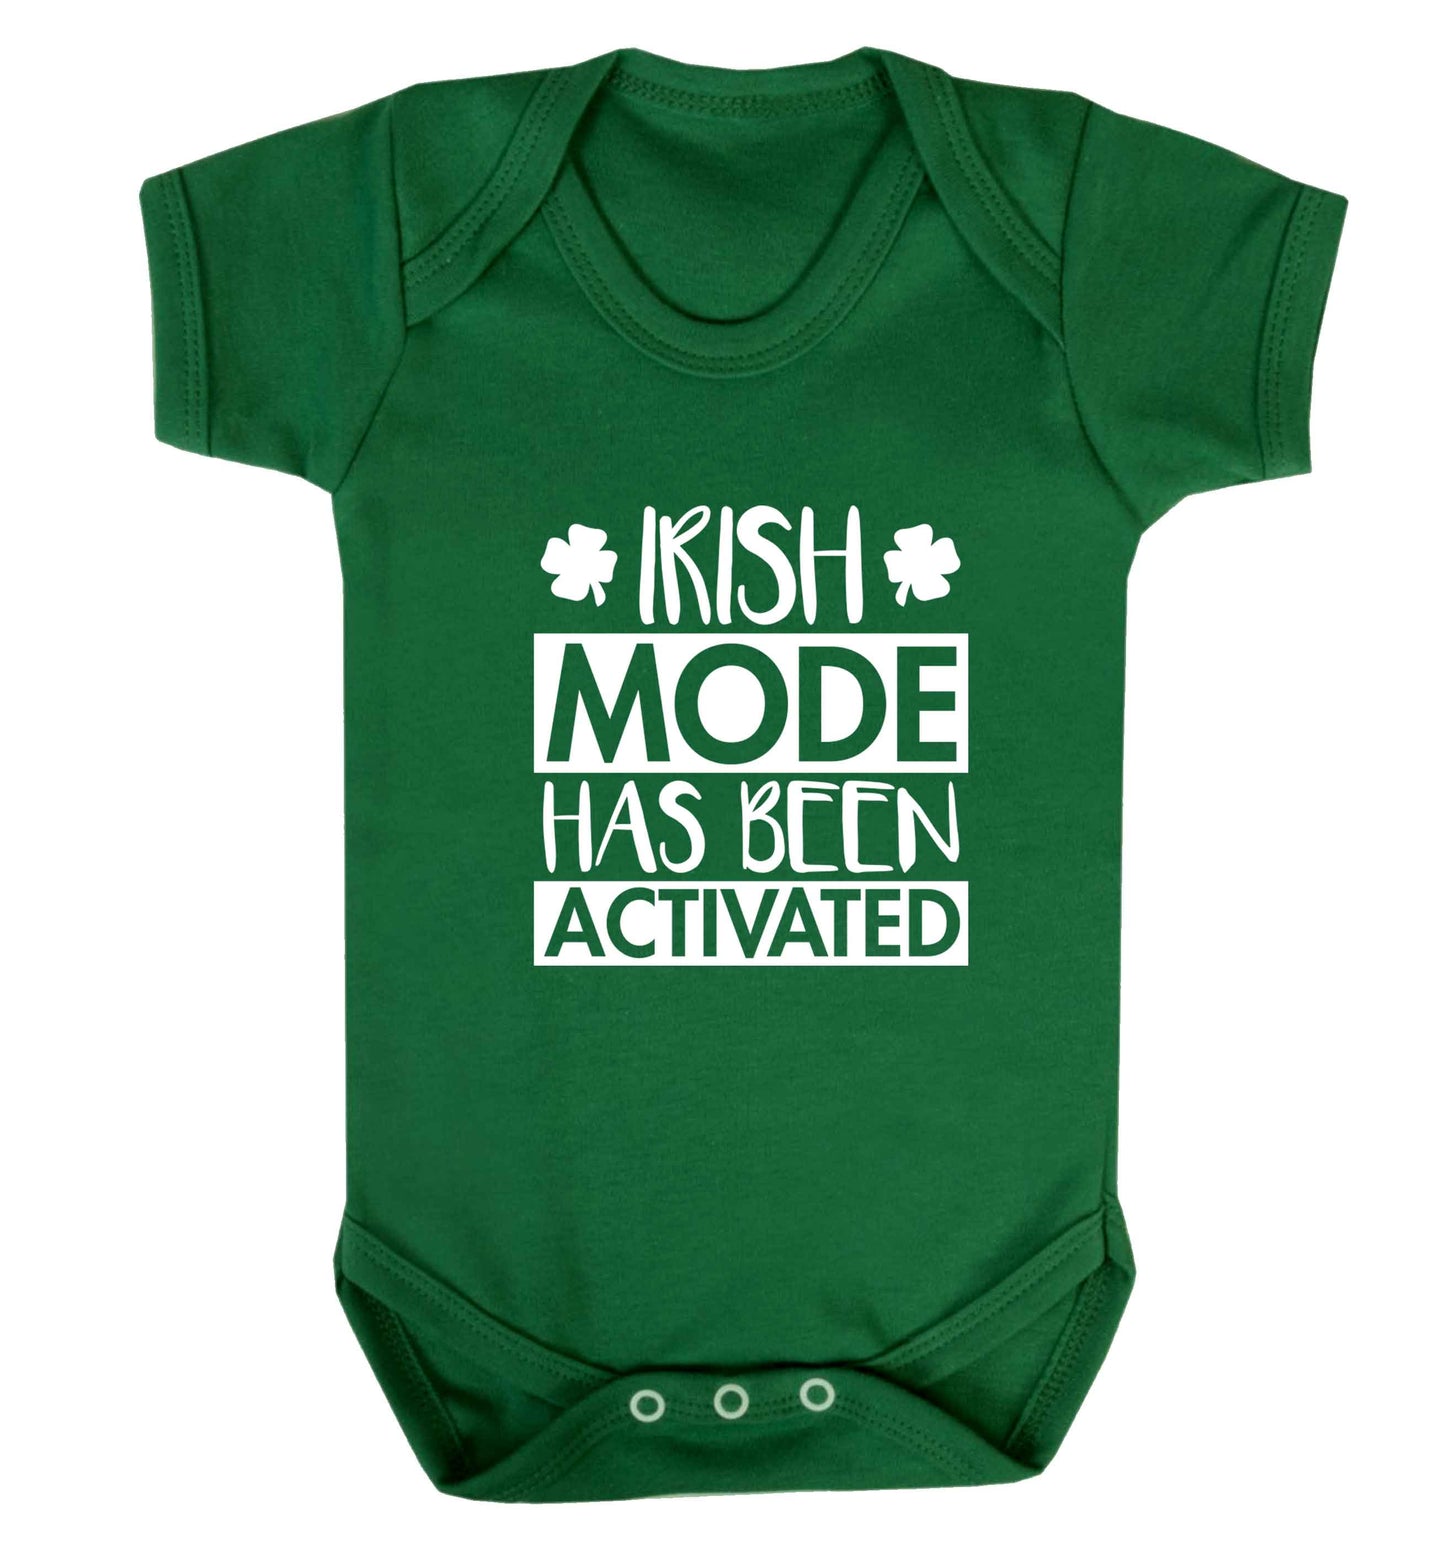 Irish mode has been activated baby vest green 18-24 months